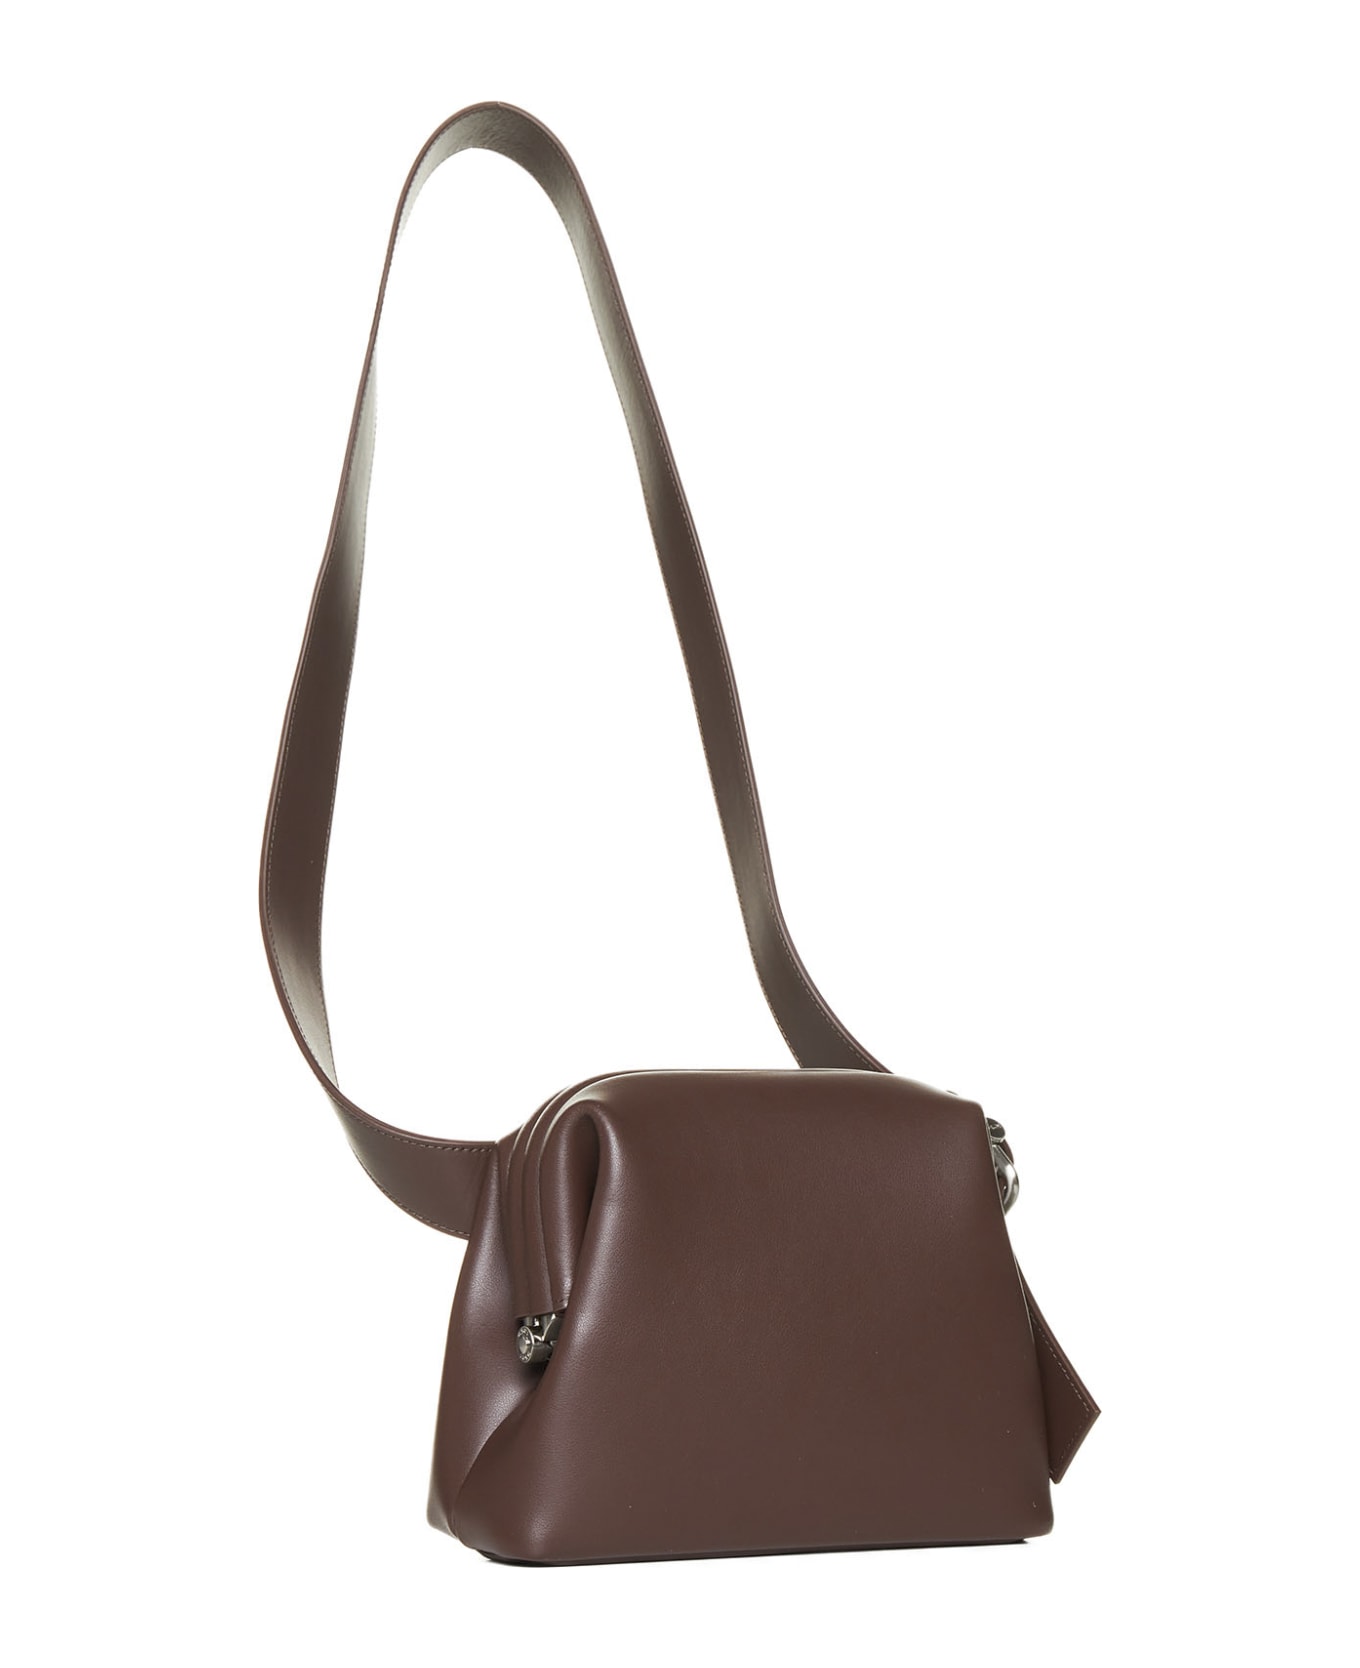 OSOI Shoulder Bag - Choco brown